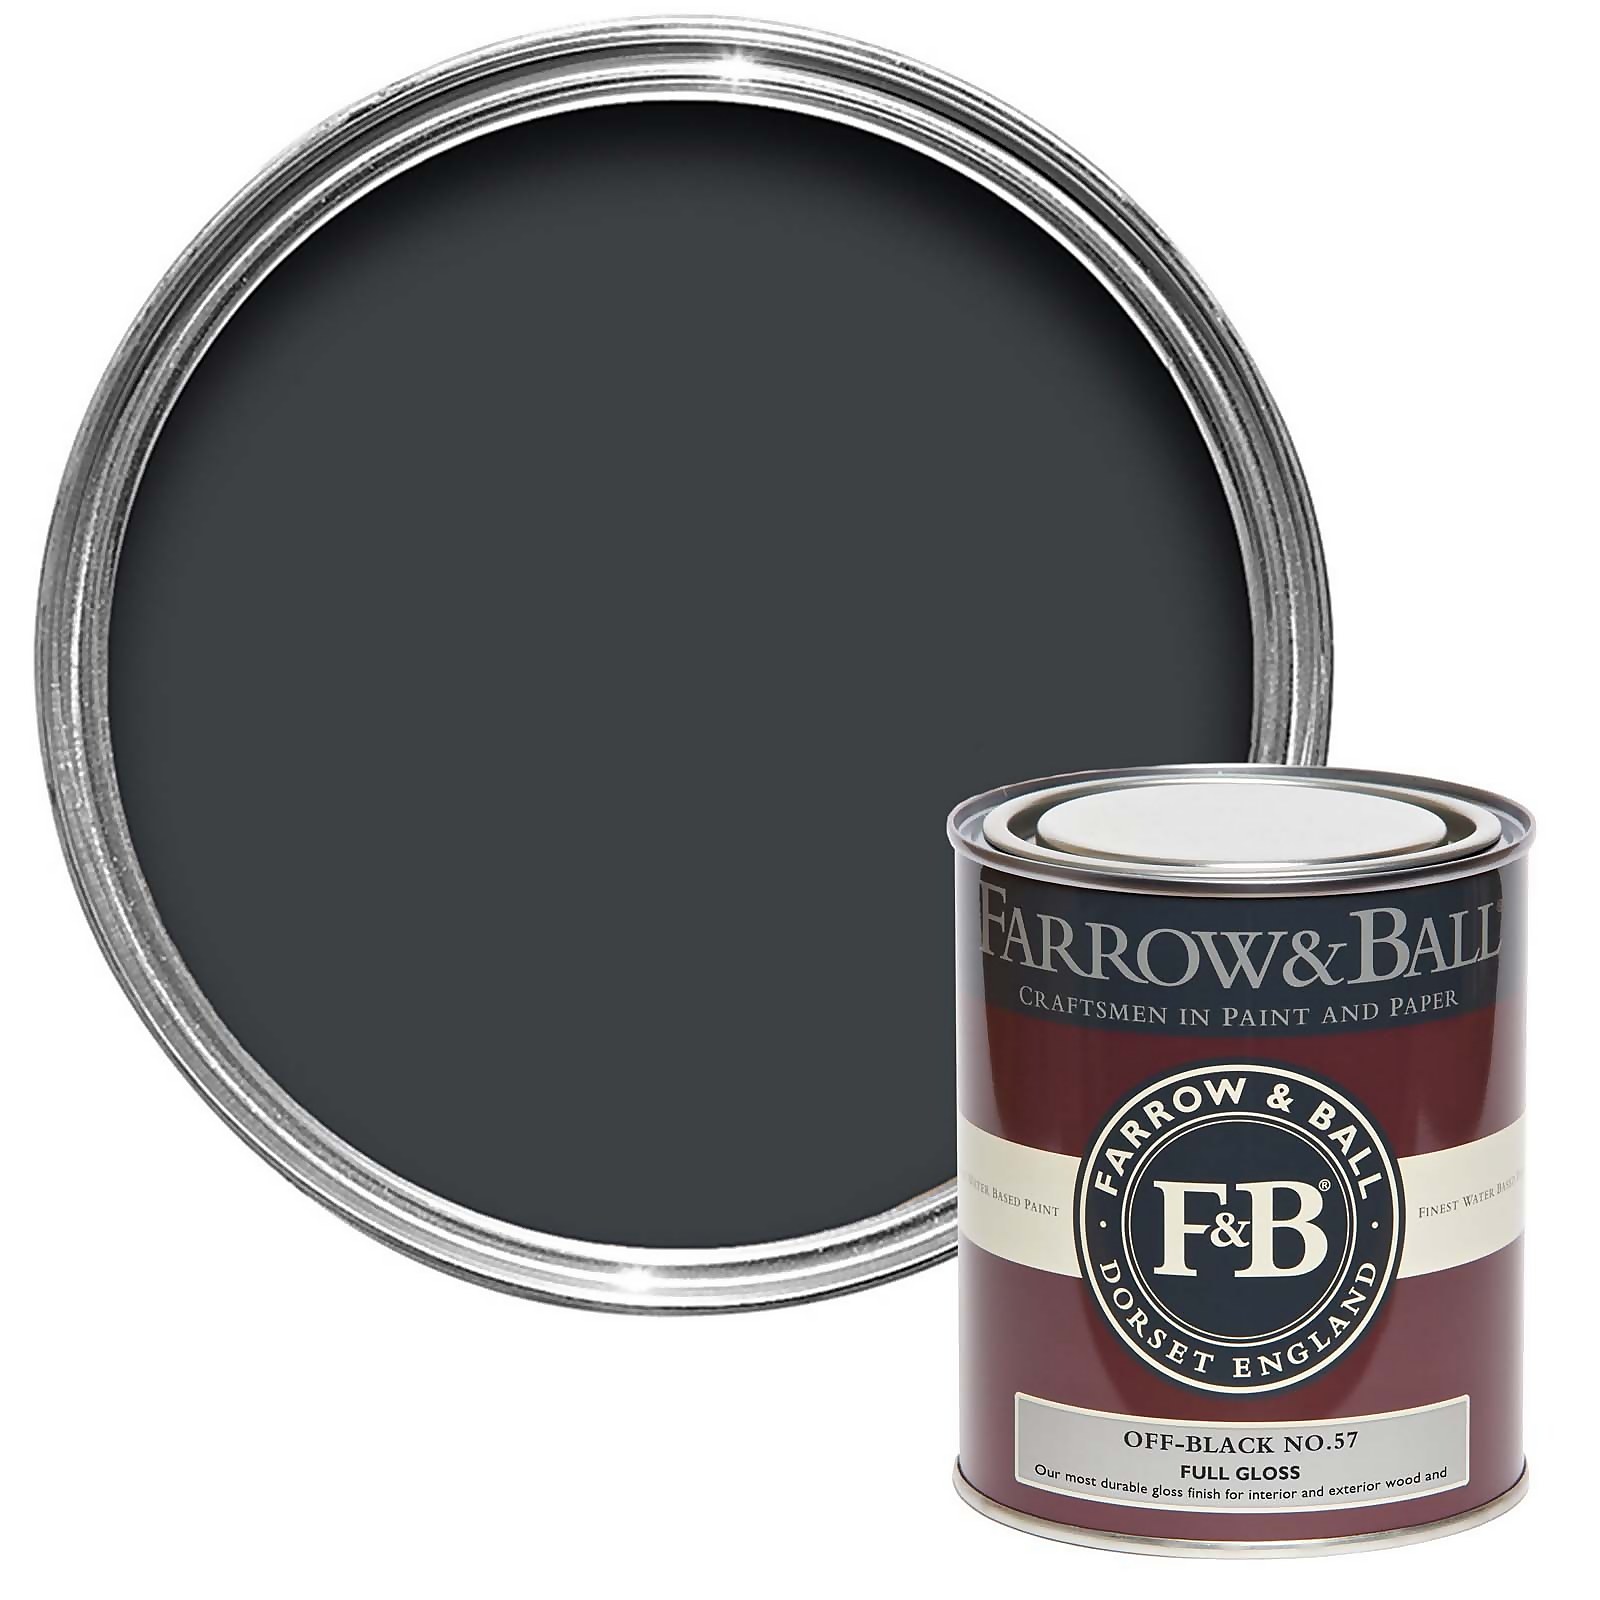 Farrow & Ball Full Gloss Paint Off-Black No.57 - 750ml